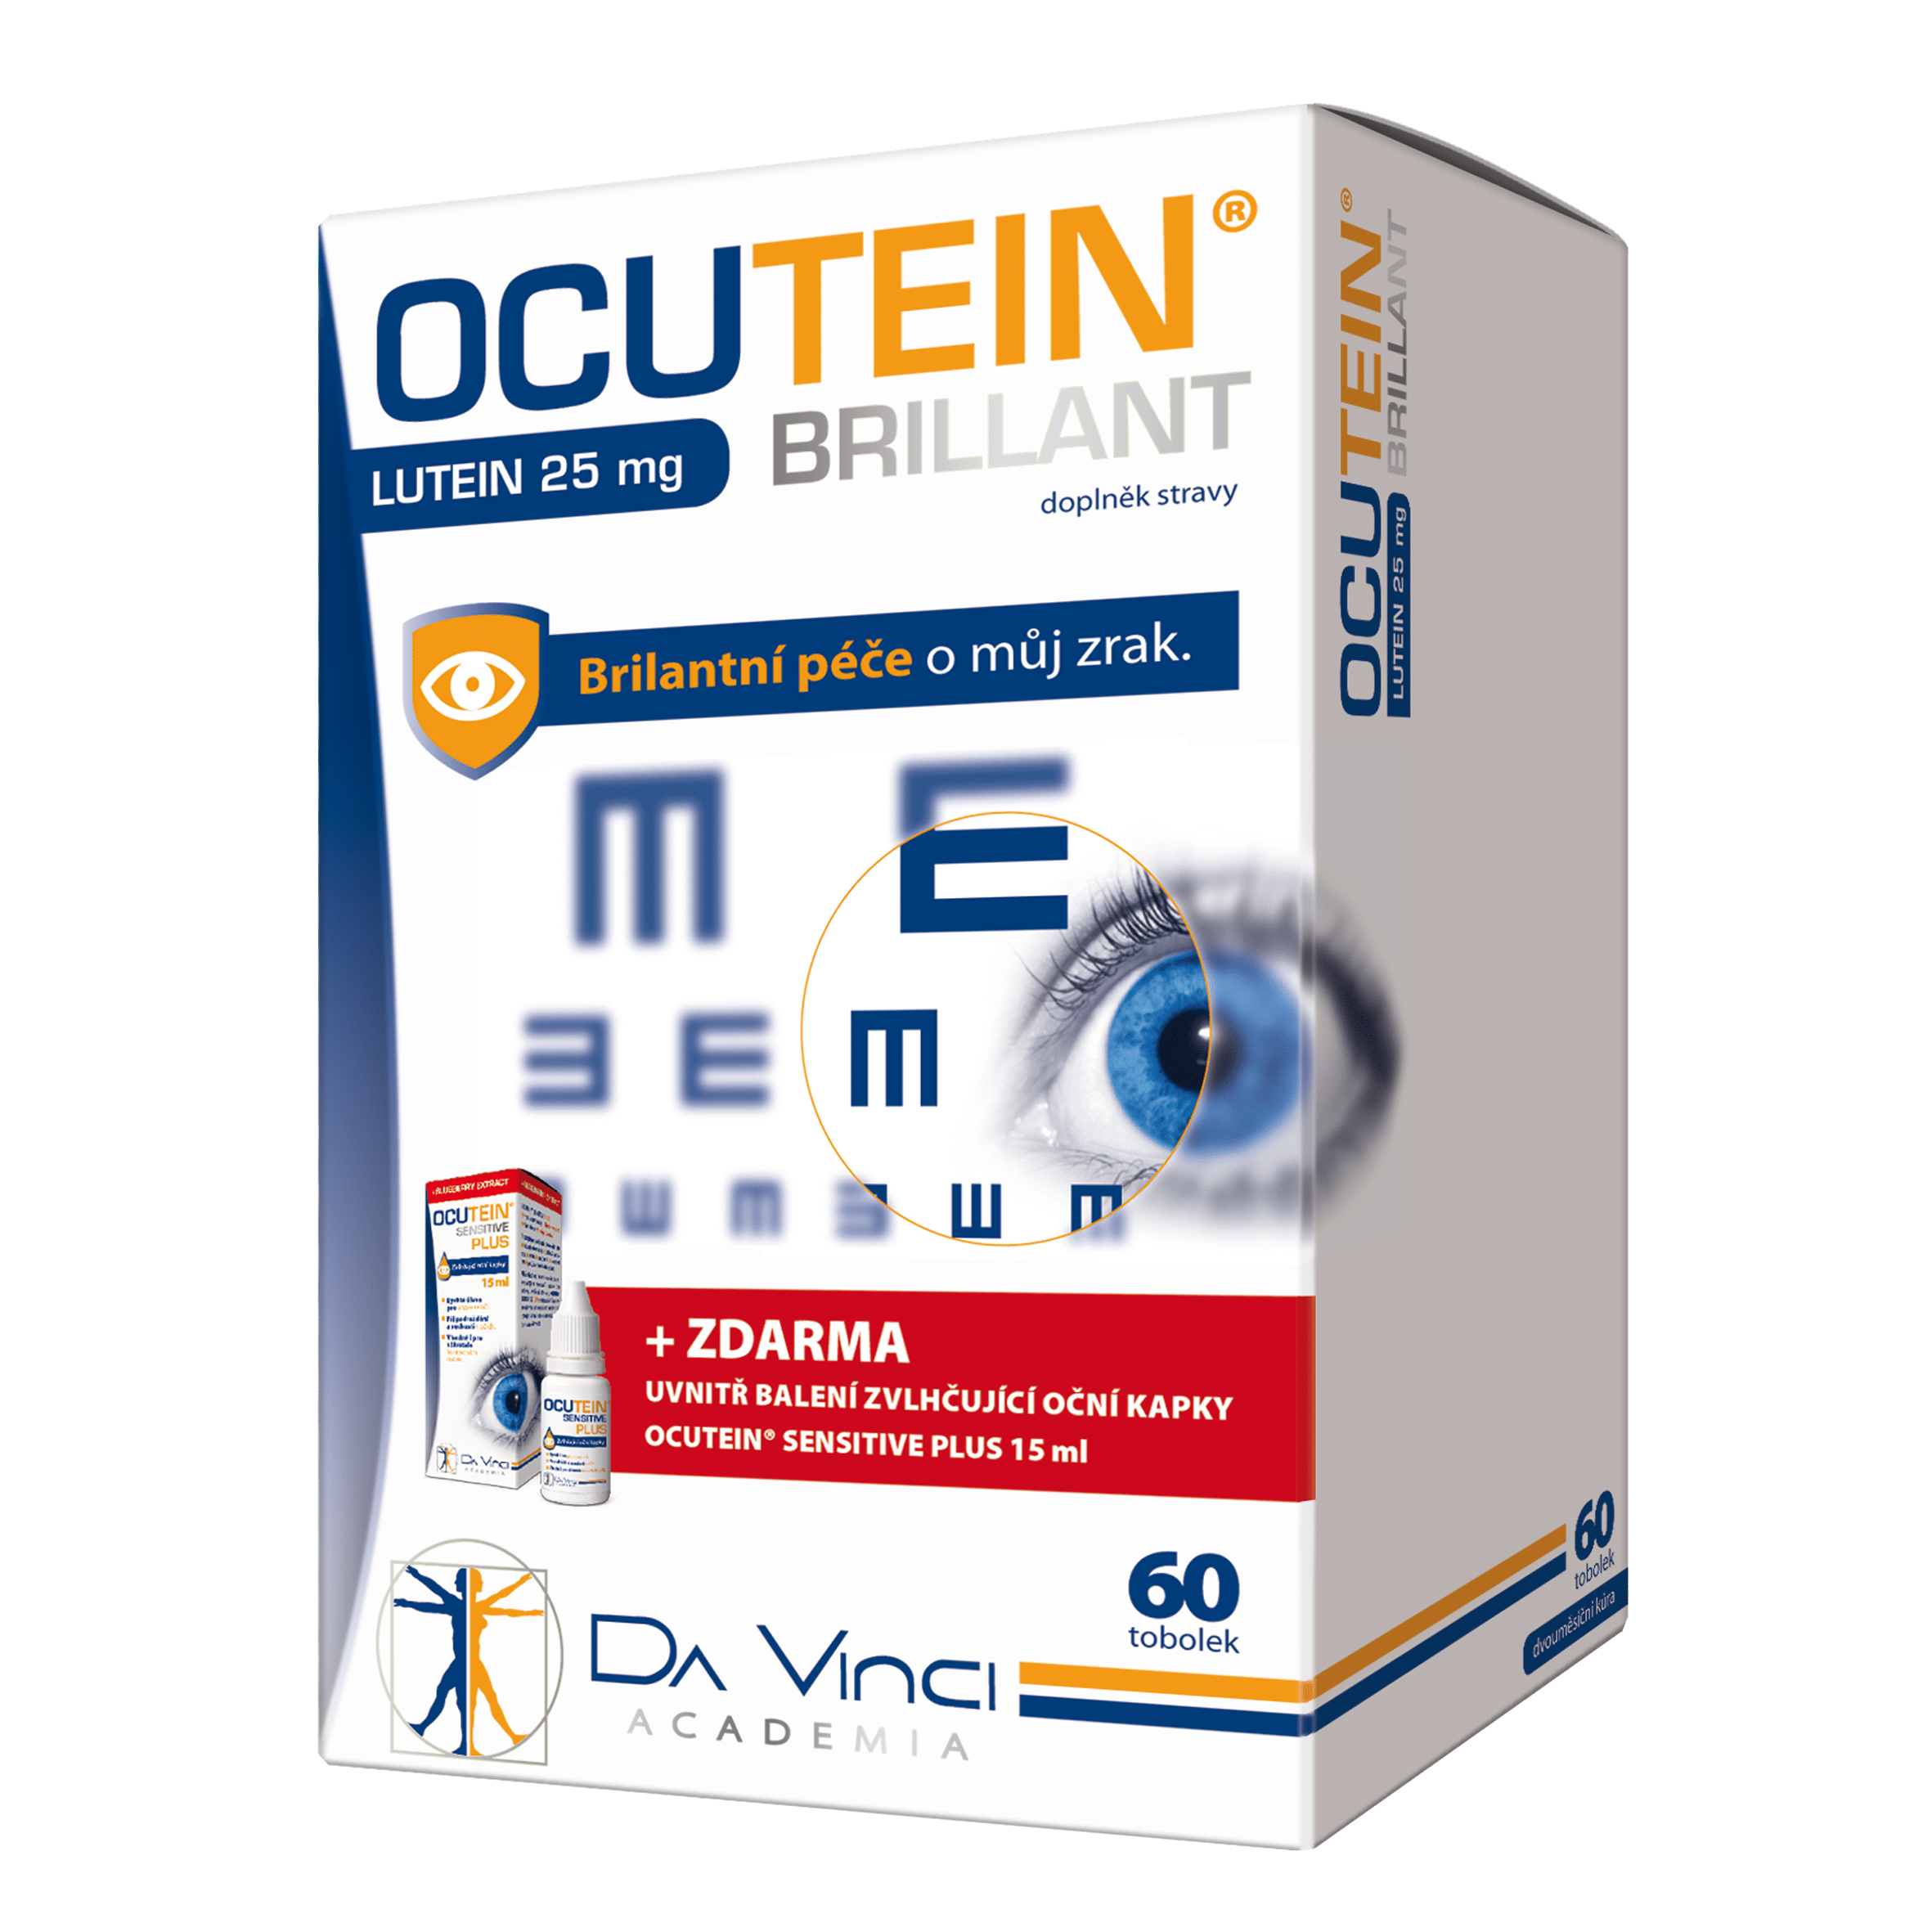 Ocutein Brillant Lutein 25 mg – DA VINCI 60 tob.+ očné kvapky 15 ml